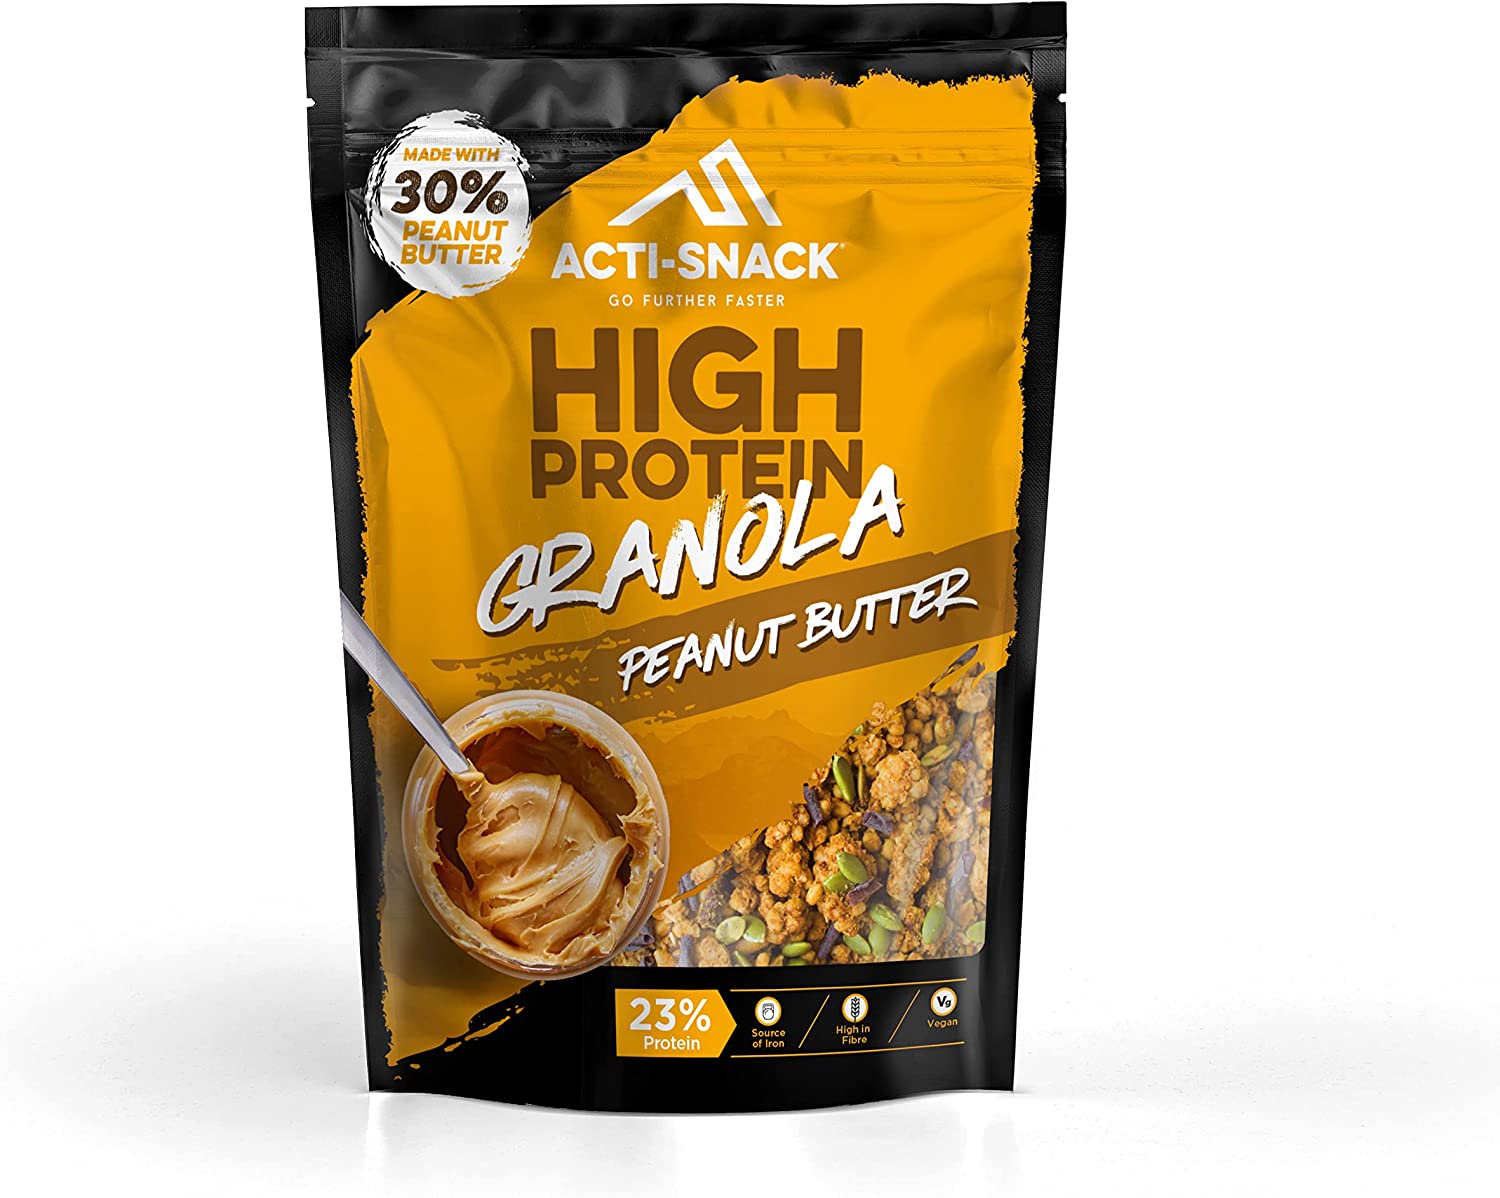 ACTI-SNACK High Protein Granola Peanut Butter keto